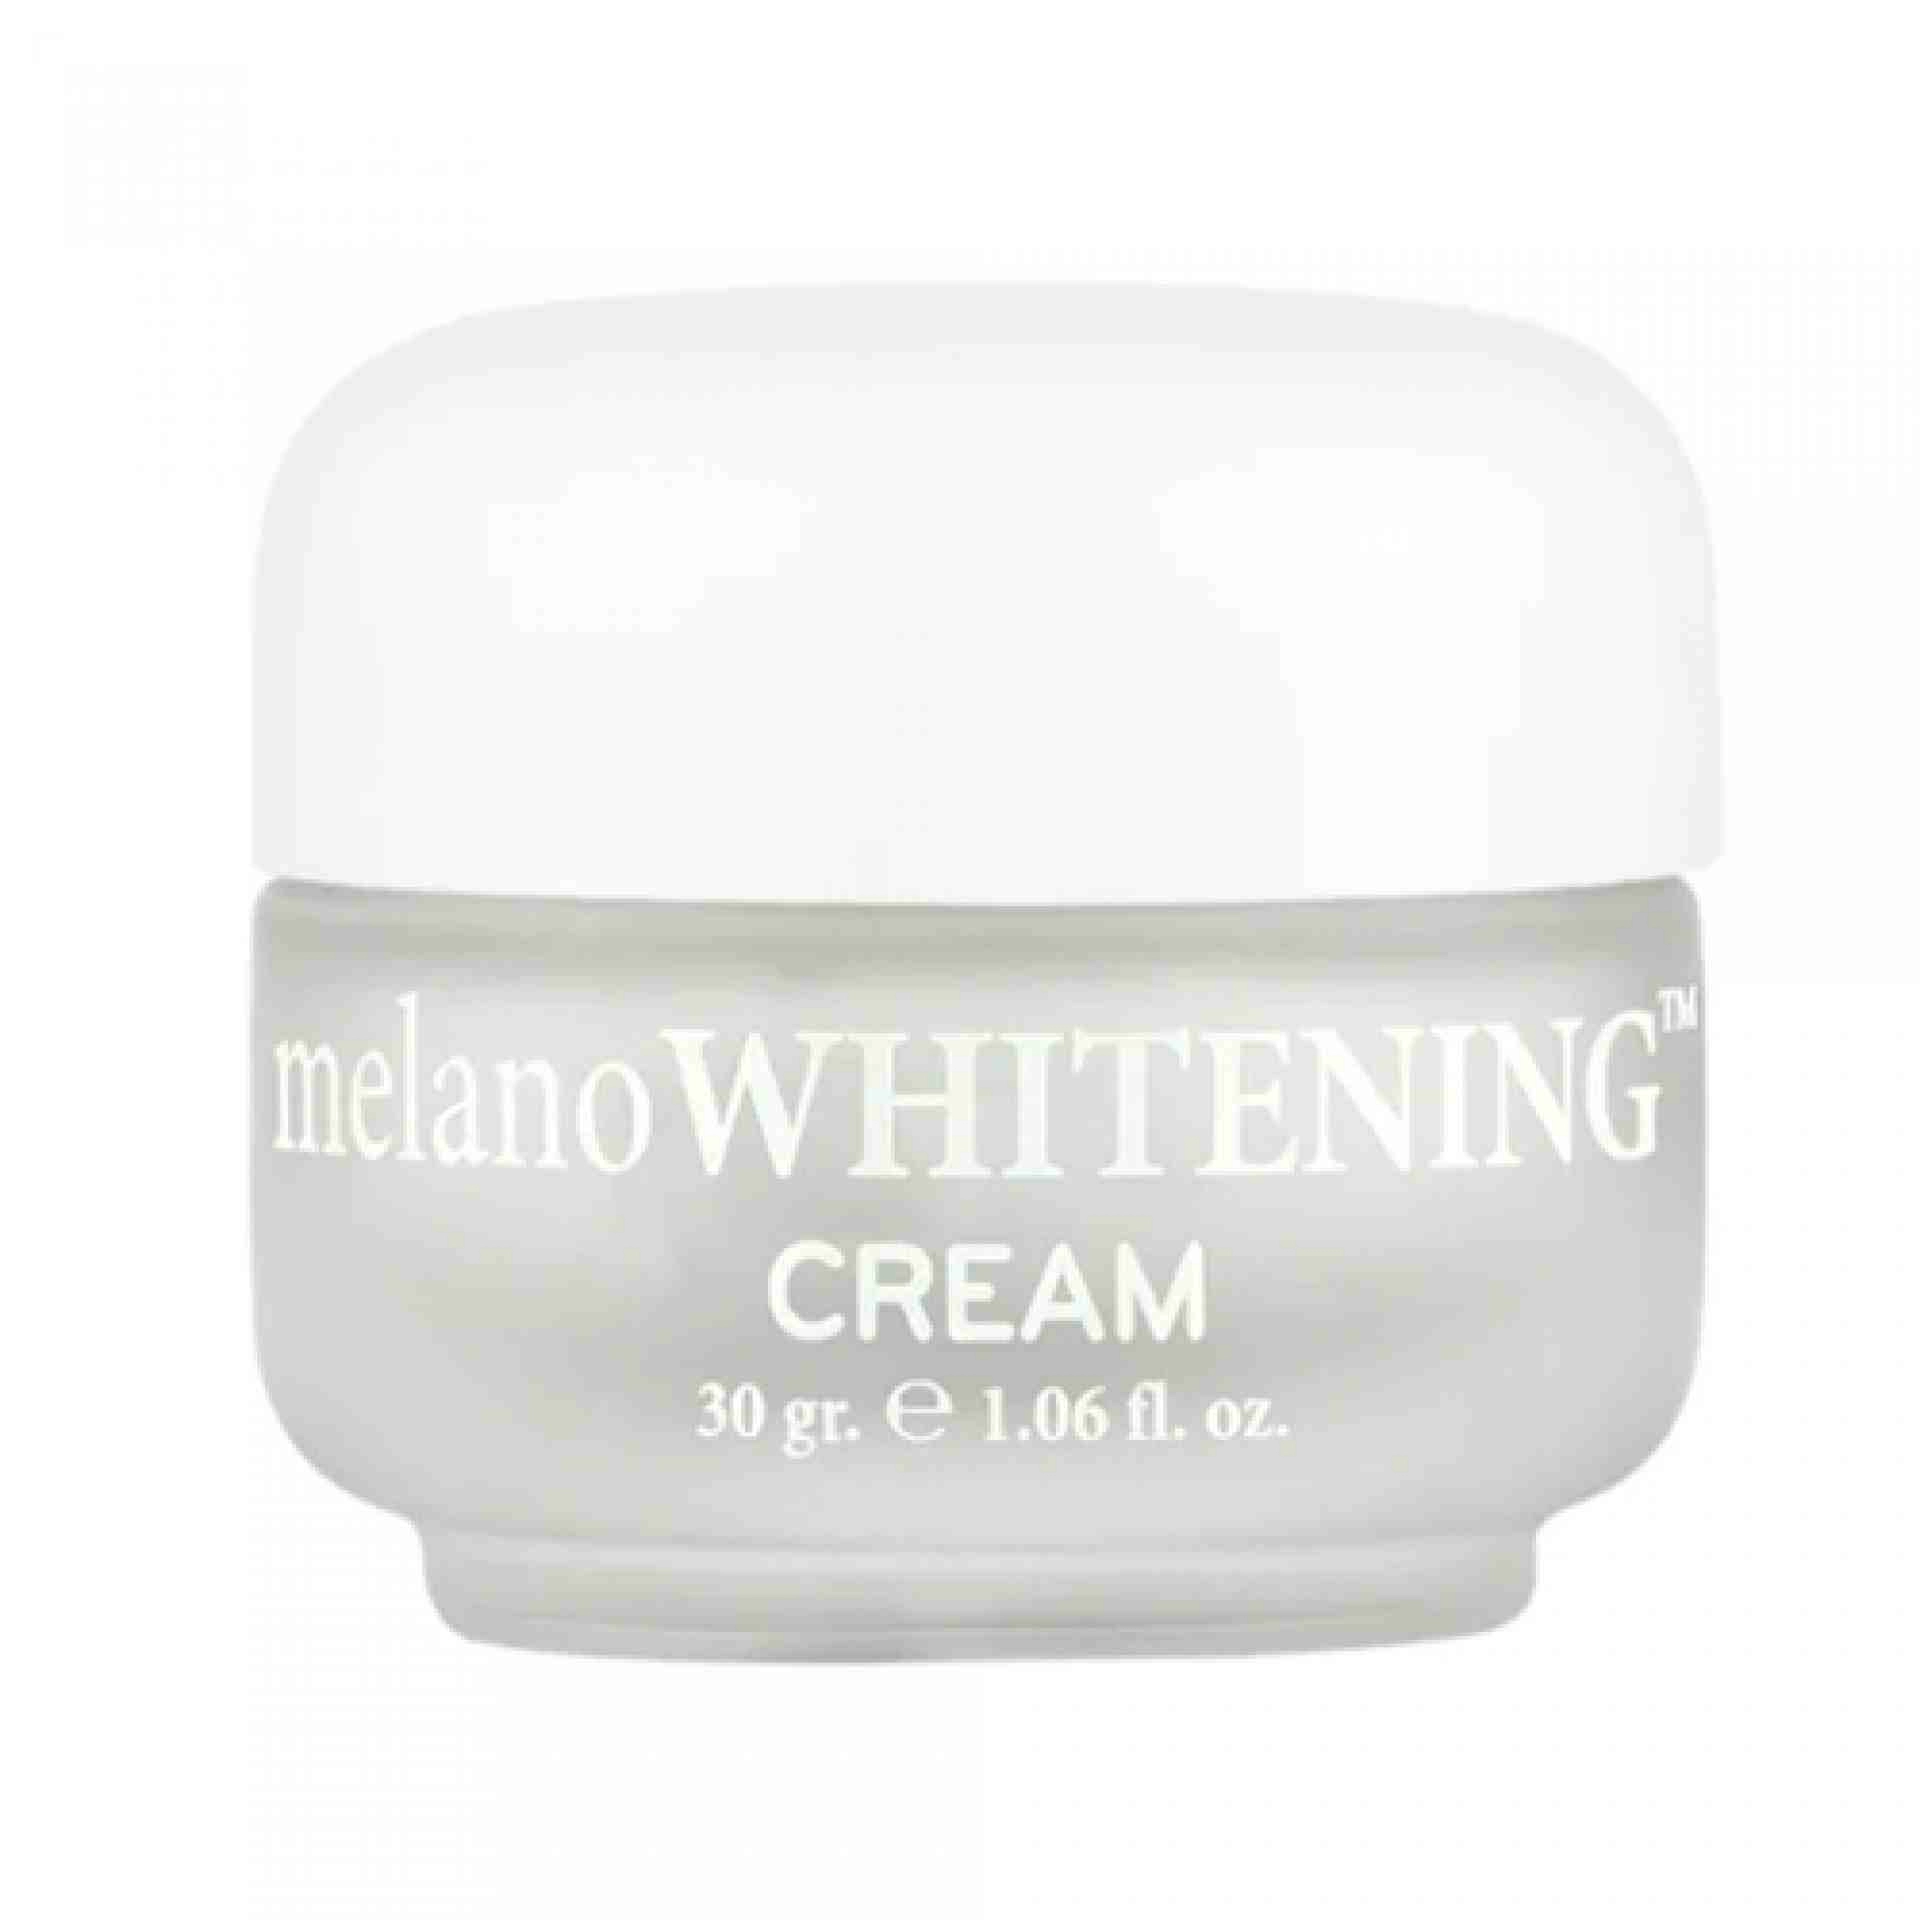 Melano Whitening Cream | Crema blanqueadora 30 gr - Melano - MCCM ®